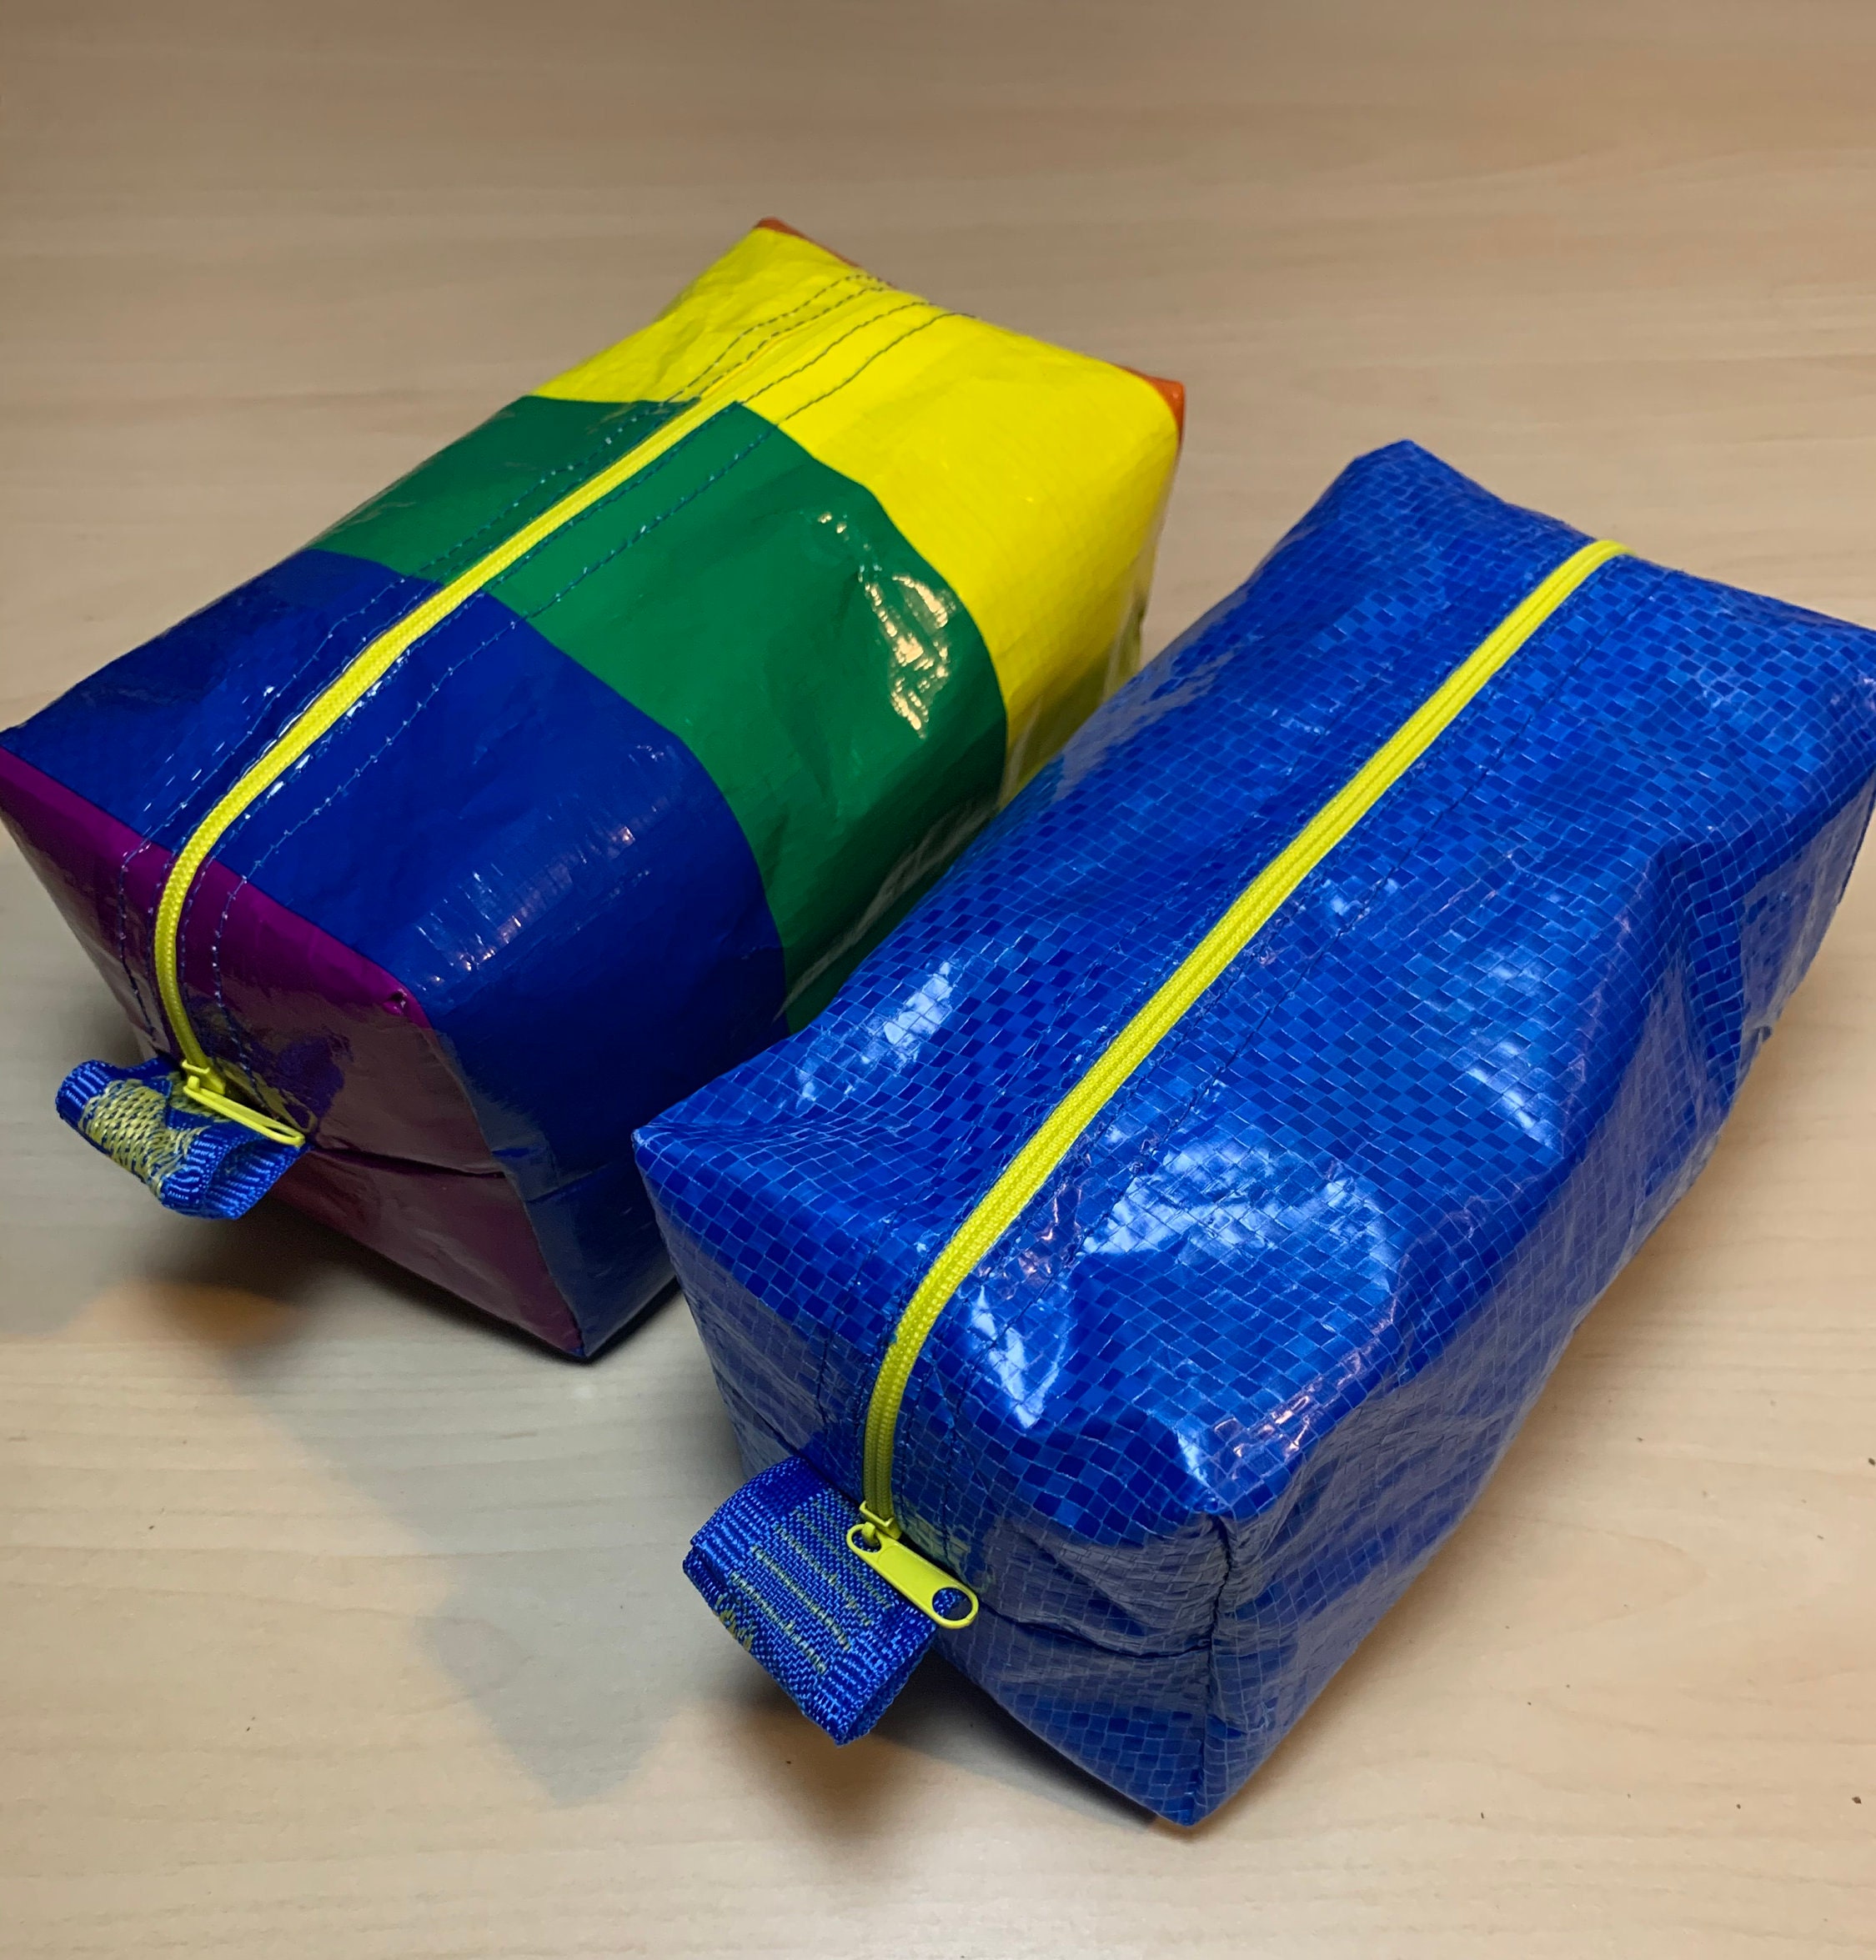 IKEA - Frakta Classic Blue Shopping Bag (x2)